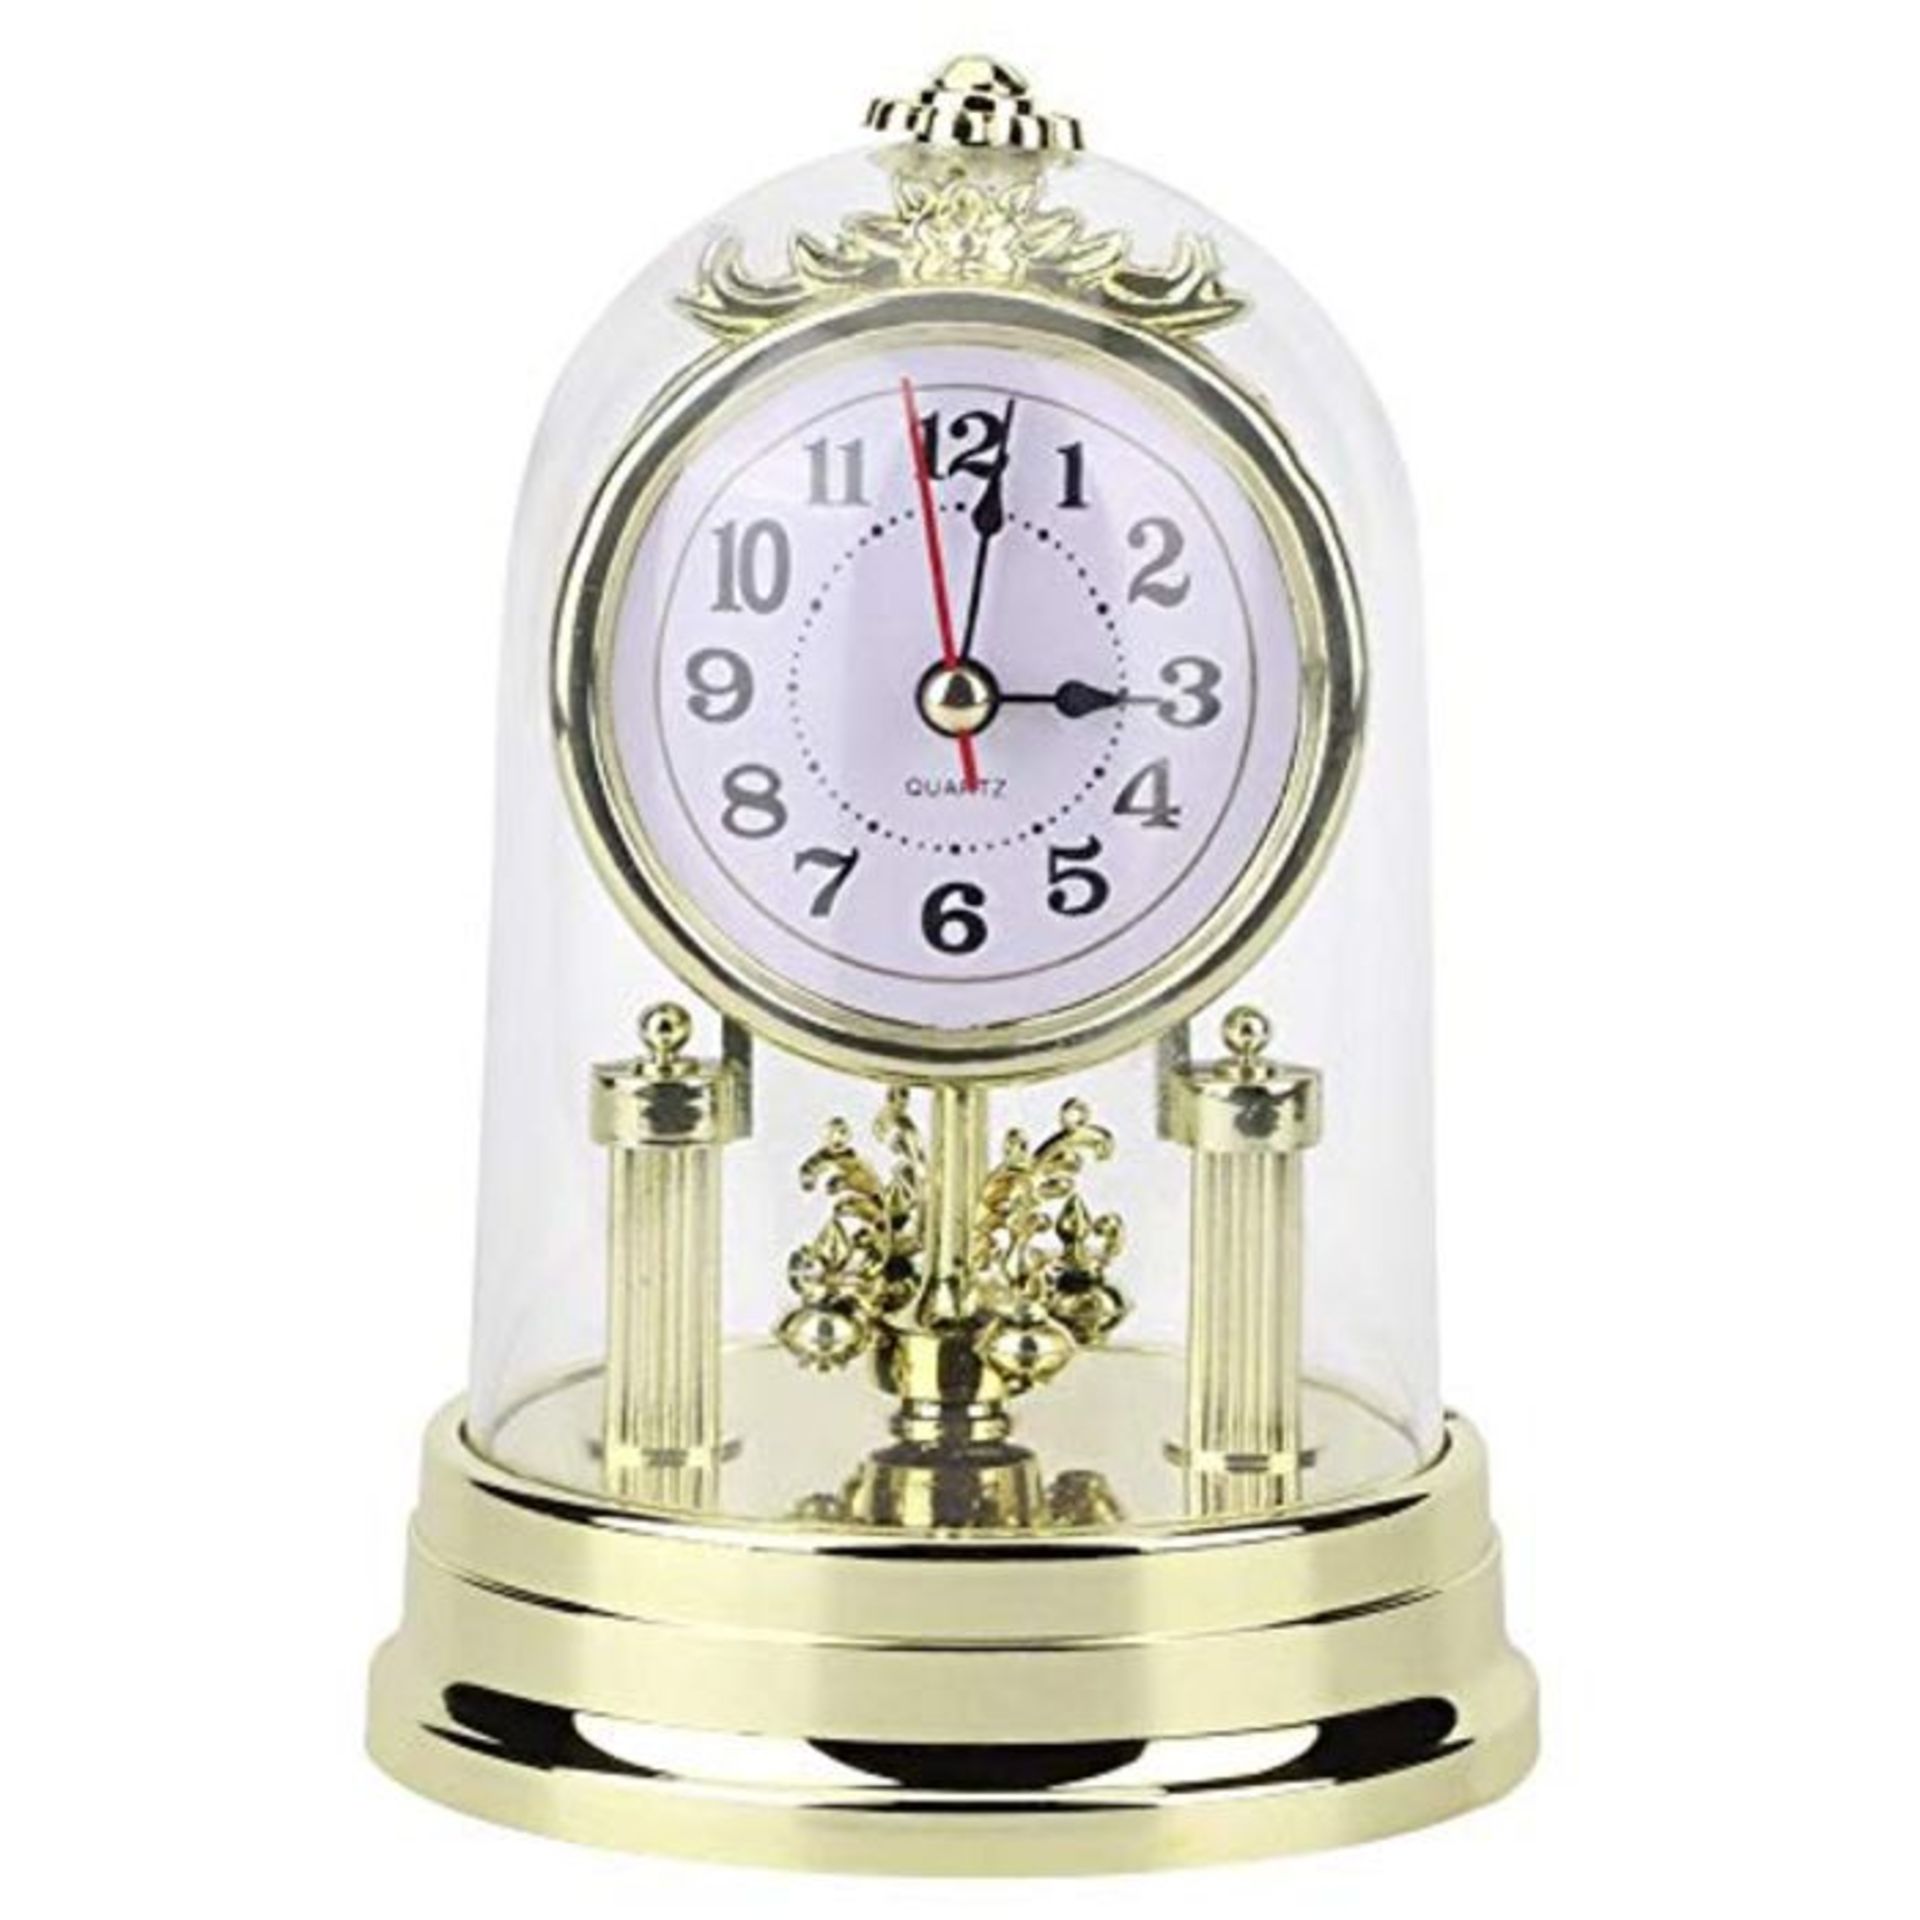 Mantel Clocks European Retro Style Non-Ticking Desk Clocks Antique Battery Powered Sil